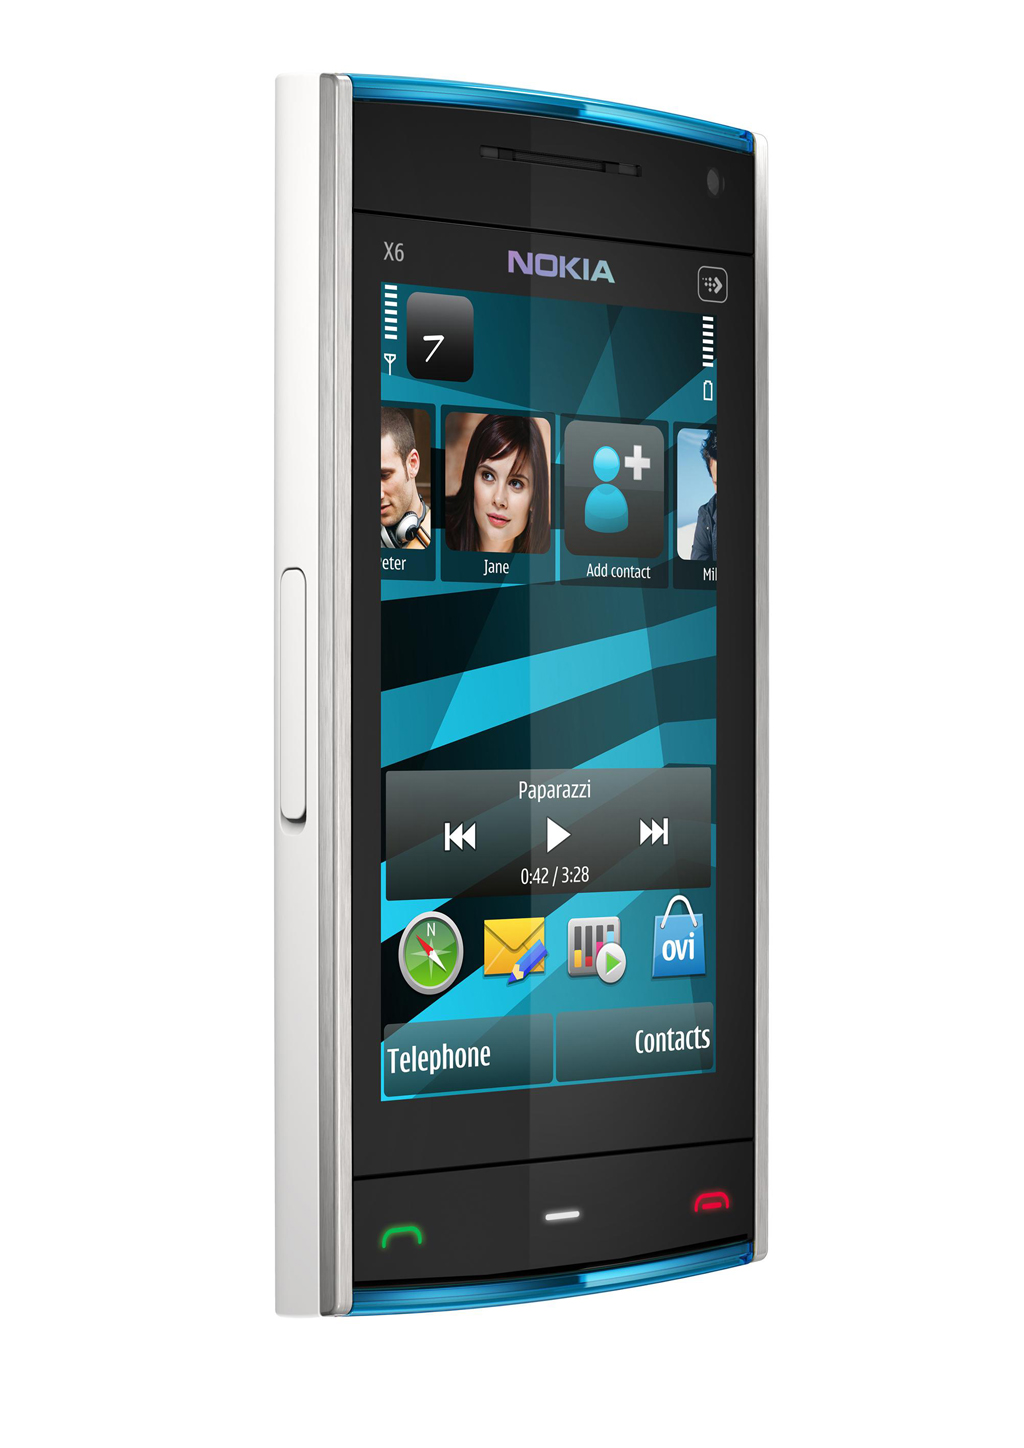 NO.10 Nokia 6
最近的好多数码新闻都被Nokia 6的新闻占据，最为王者的回归，确实吸引了无数的目光。配置也不错，喜欢Nokia的消费者可以关注一下。